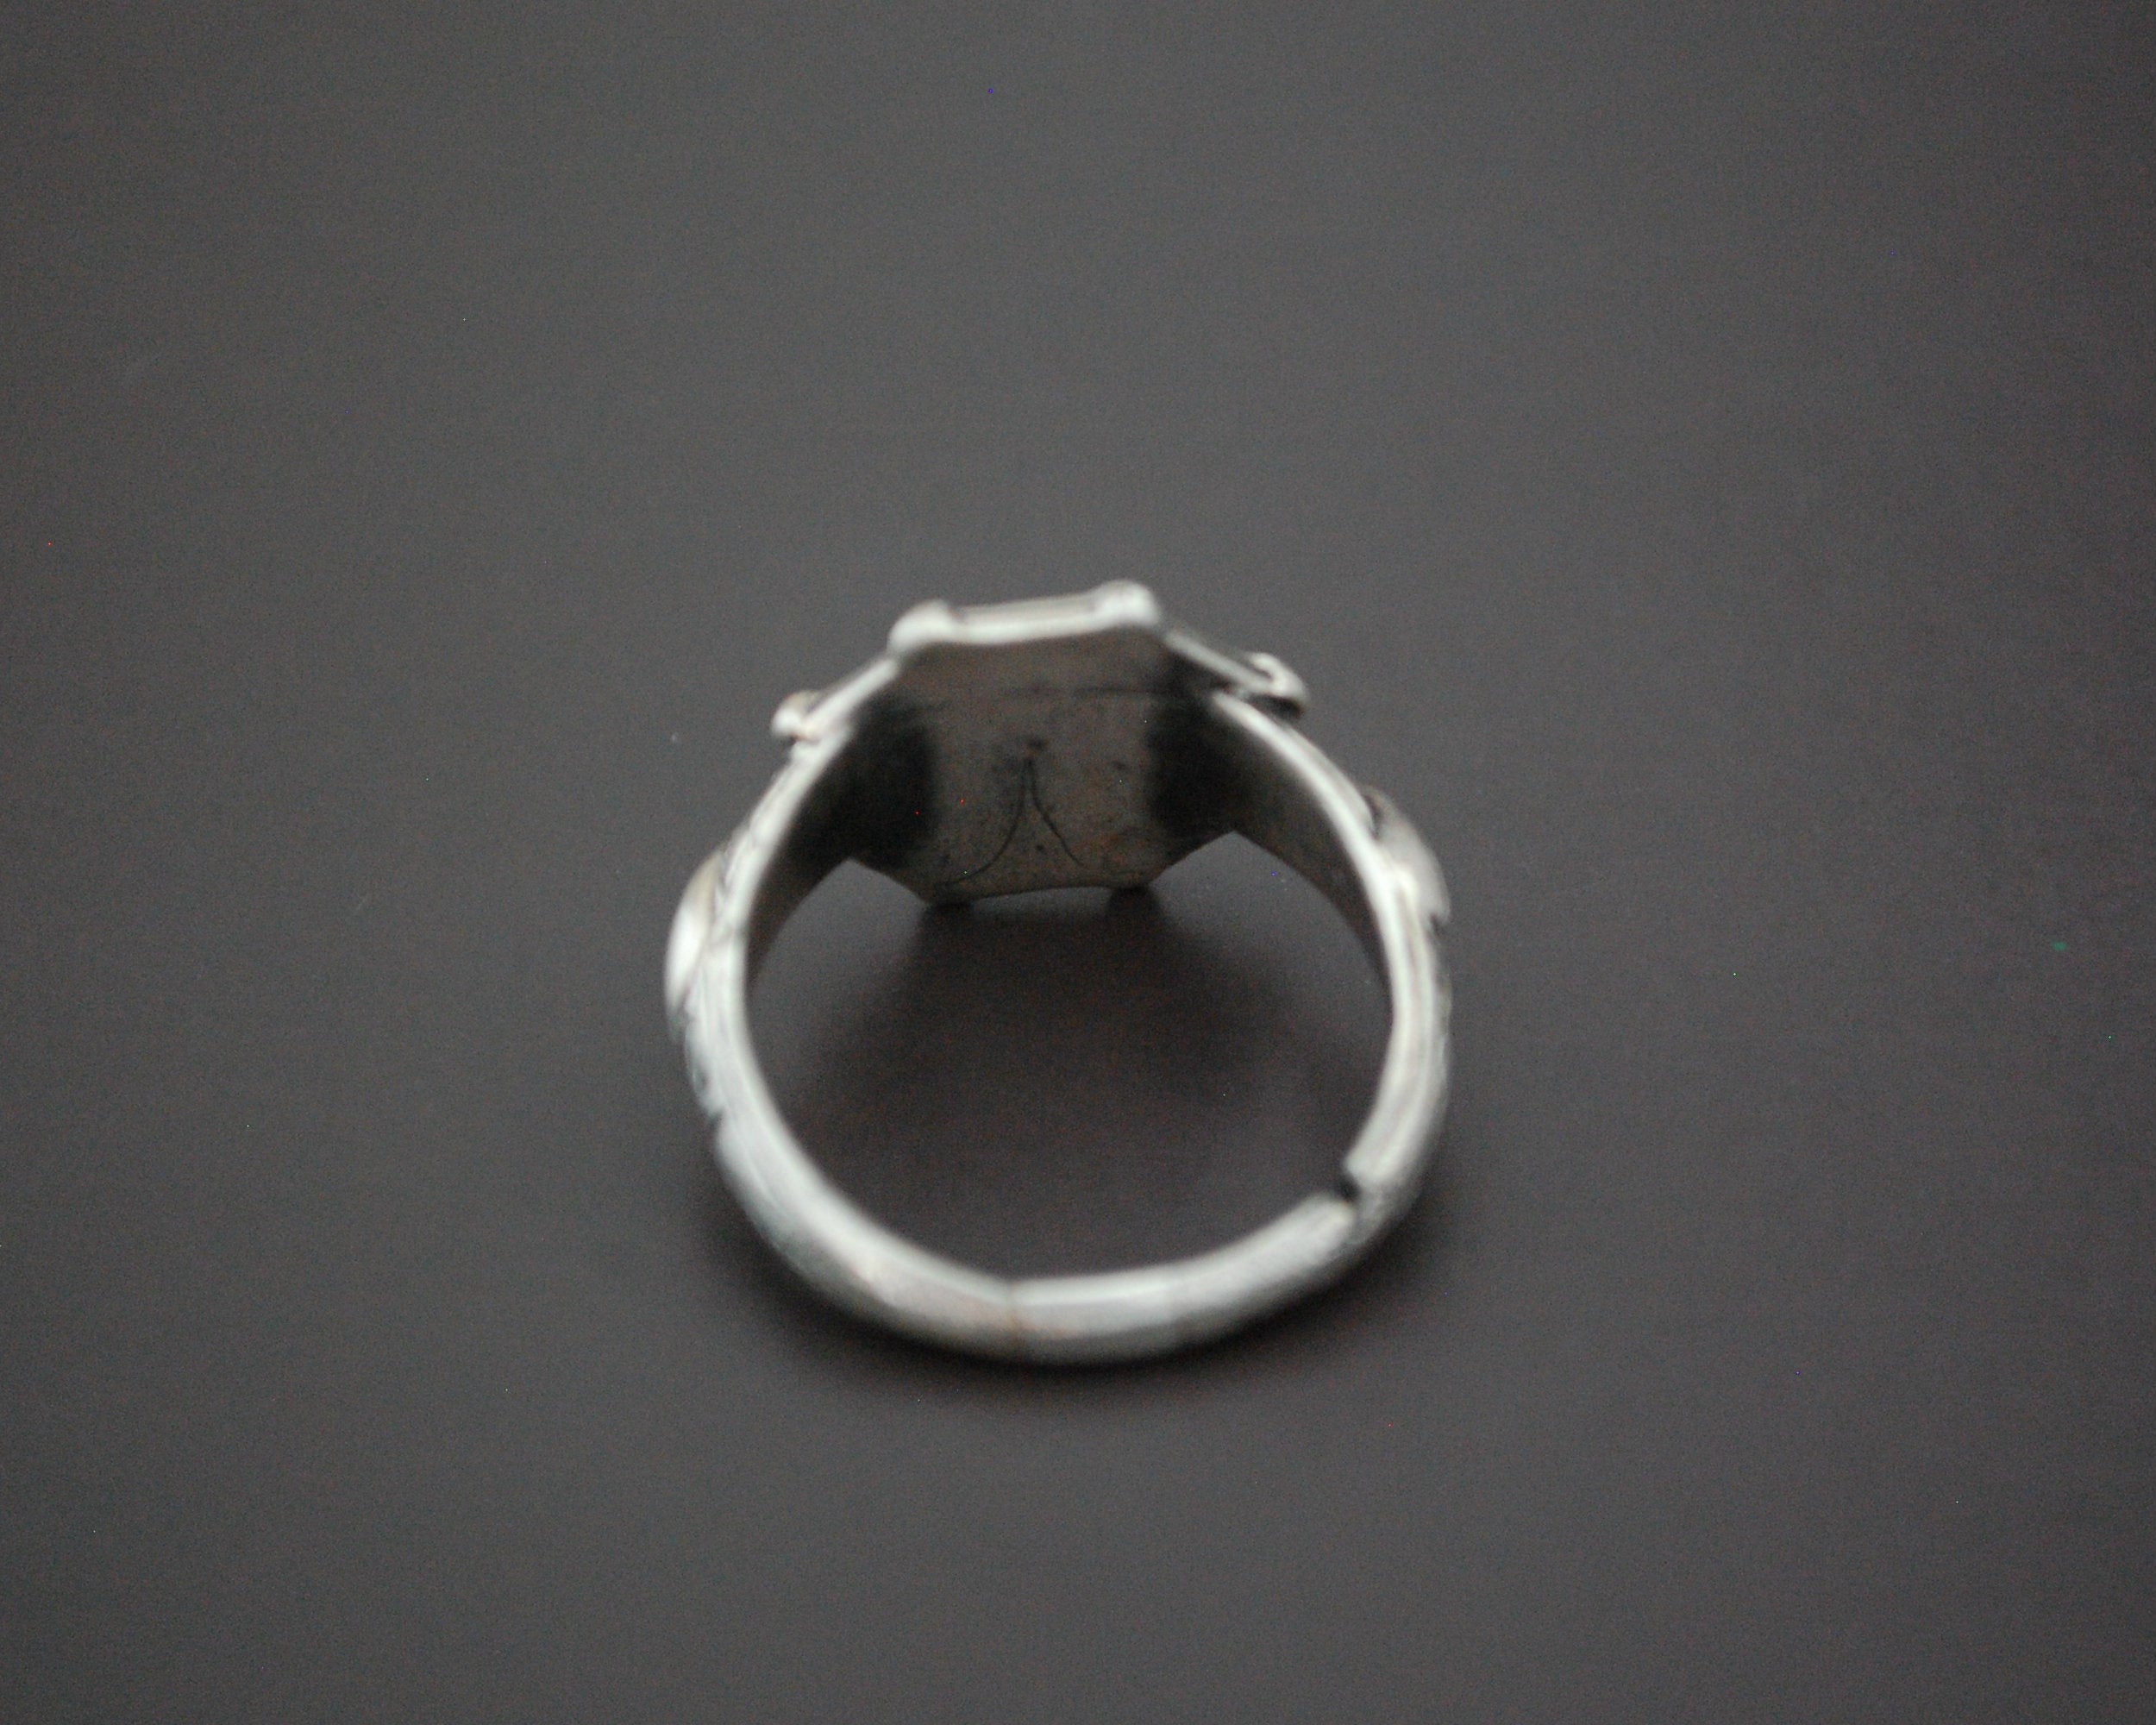 Old Turkmen Signet Ring with Deer - Size  8.5